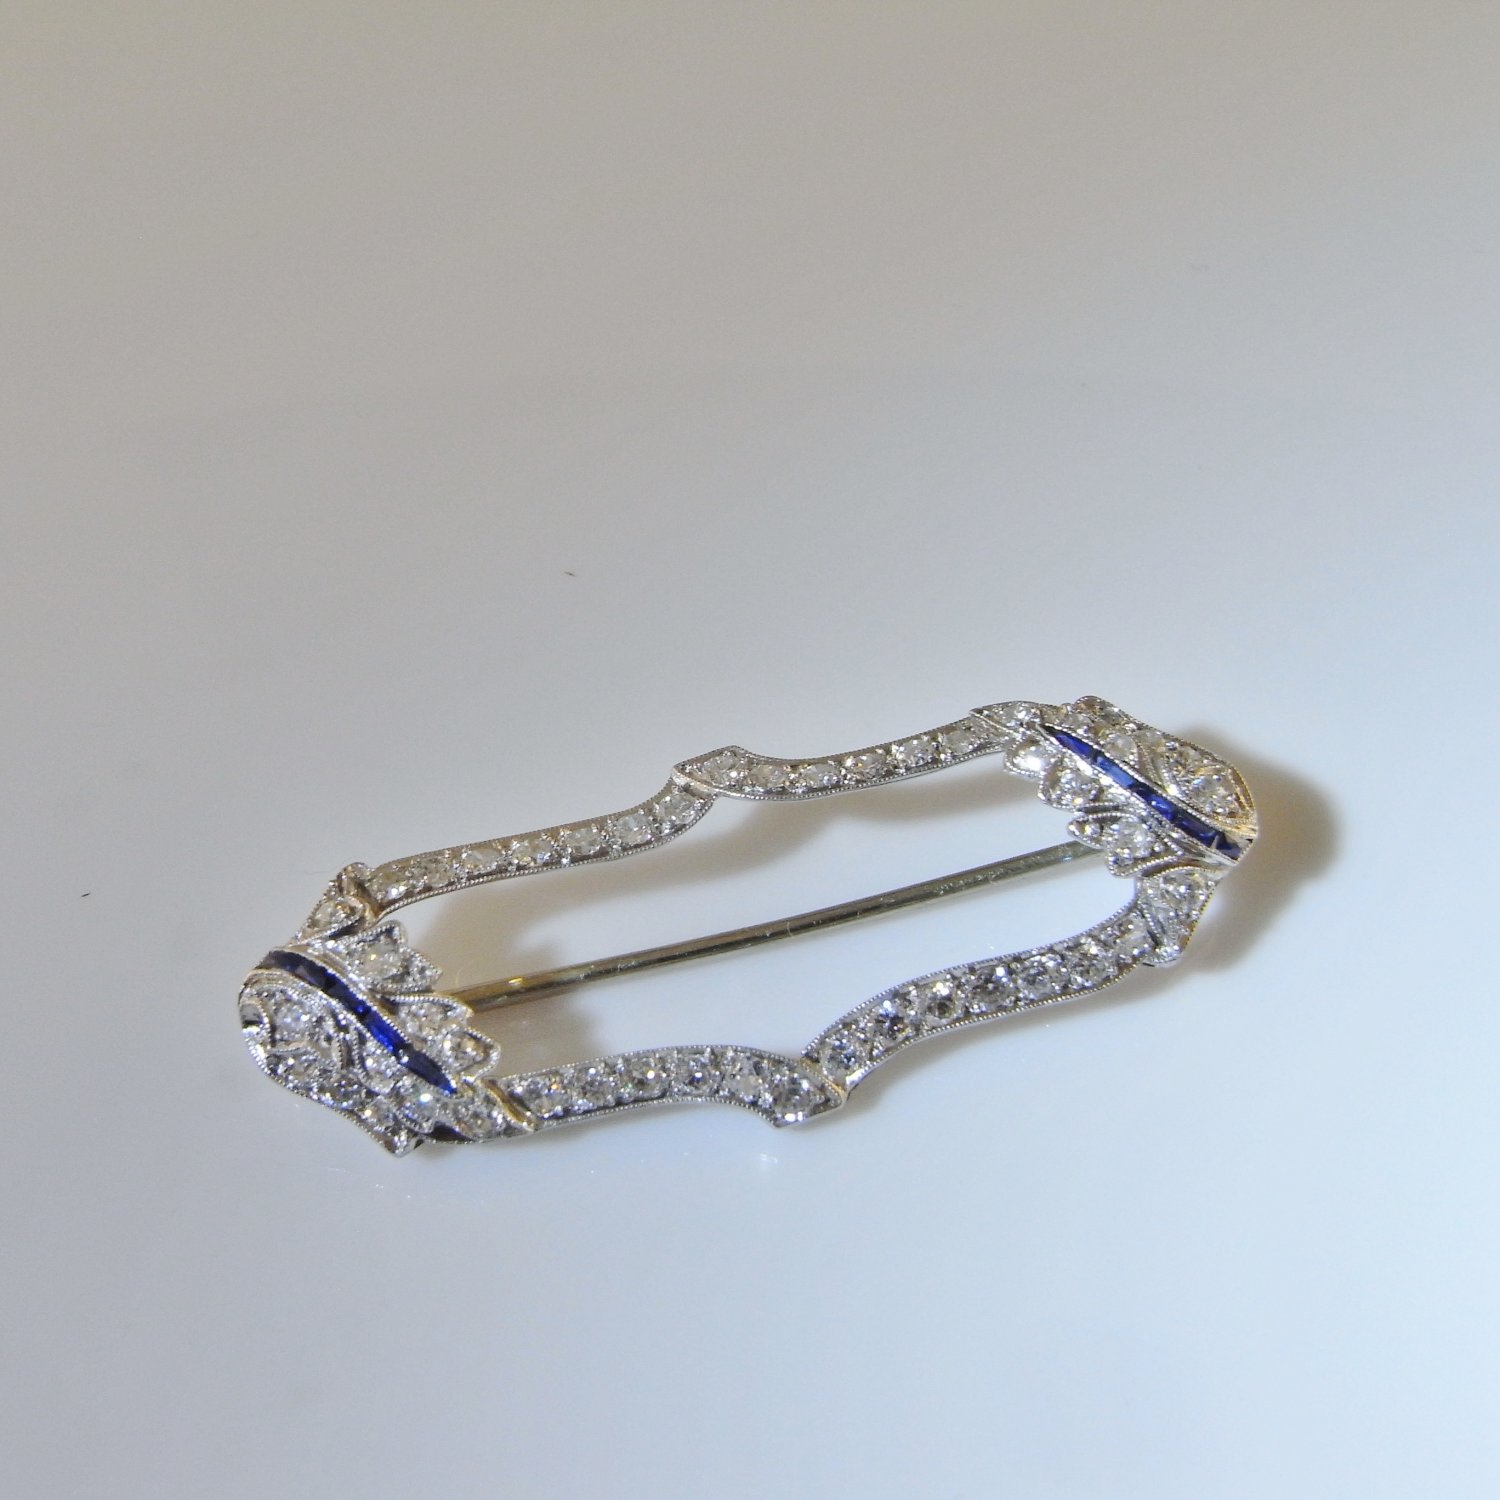 Fine Art Deco Hand made Platinum Diamond Sapphire Brooch Pin Edwardian Belle Epoque Circa 1900 Blue White Antique Old Cut Diamonds Dainty Delicate Bridal Wedding Anniversary One of a Kind Jewelry